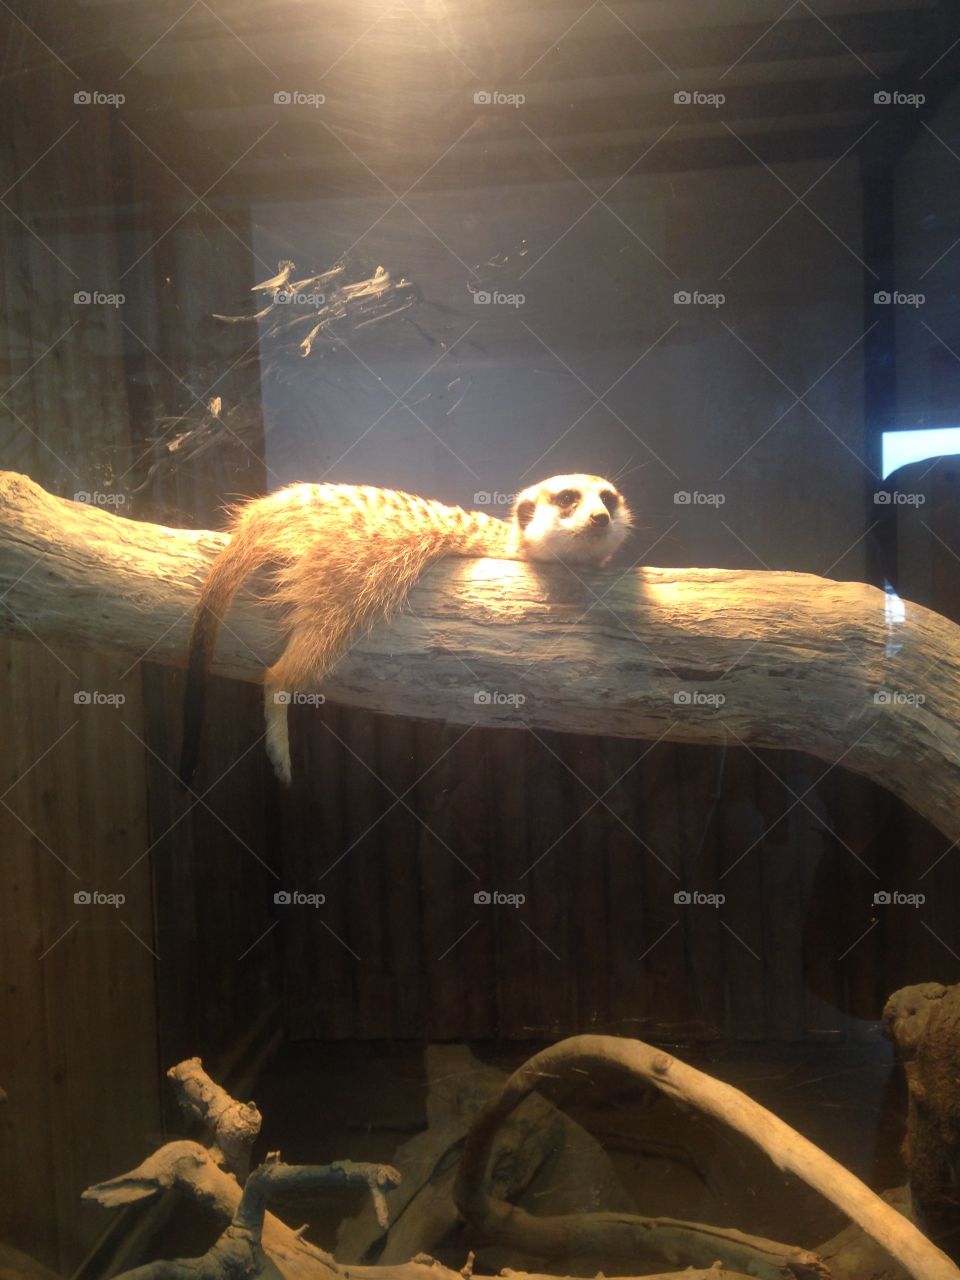 How cute ♡Lazy sloth♡